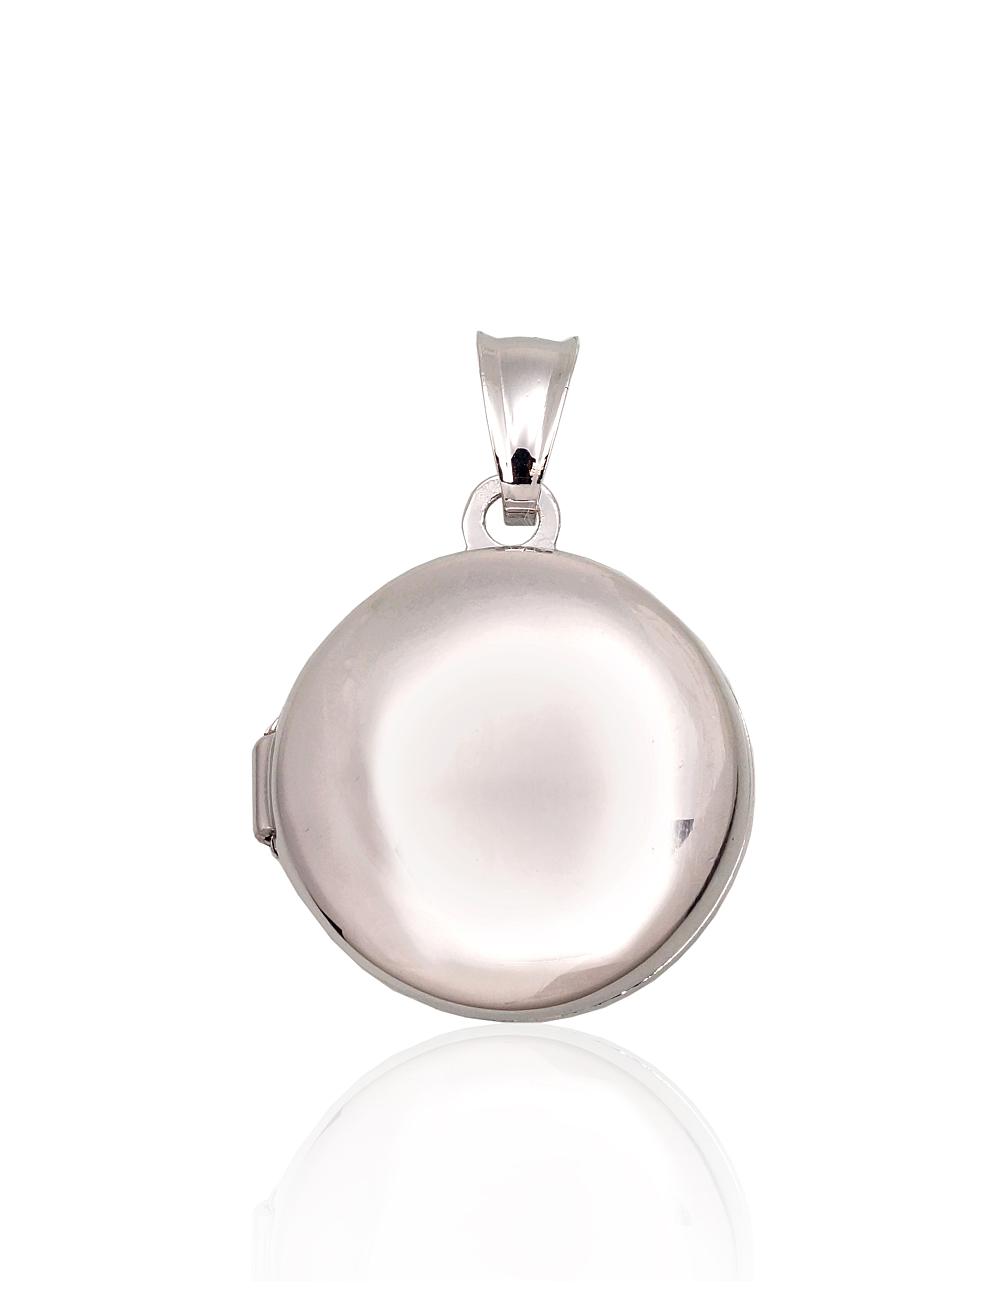 Silver pendant